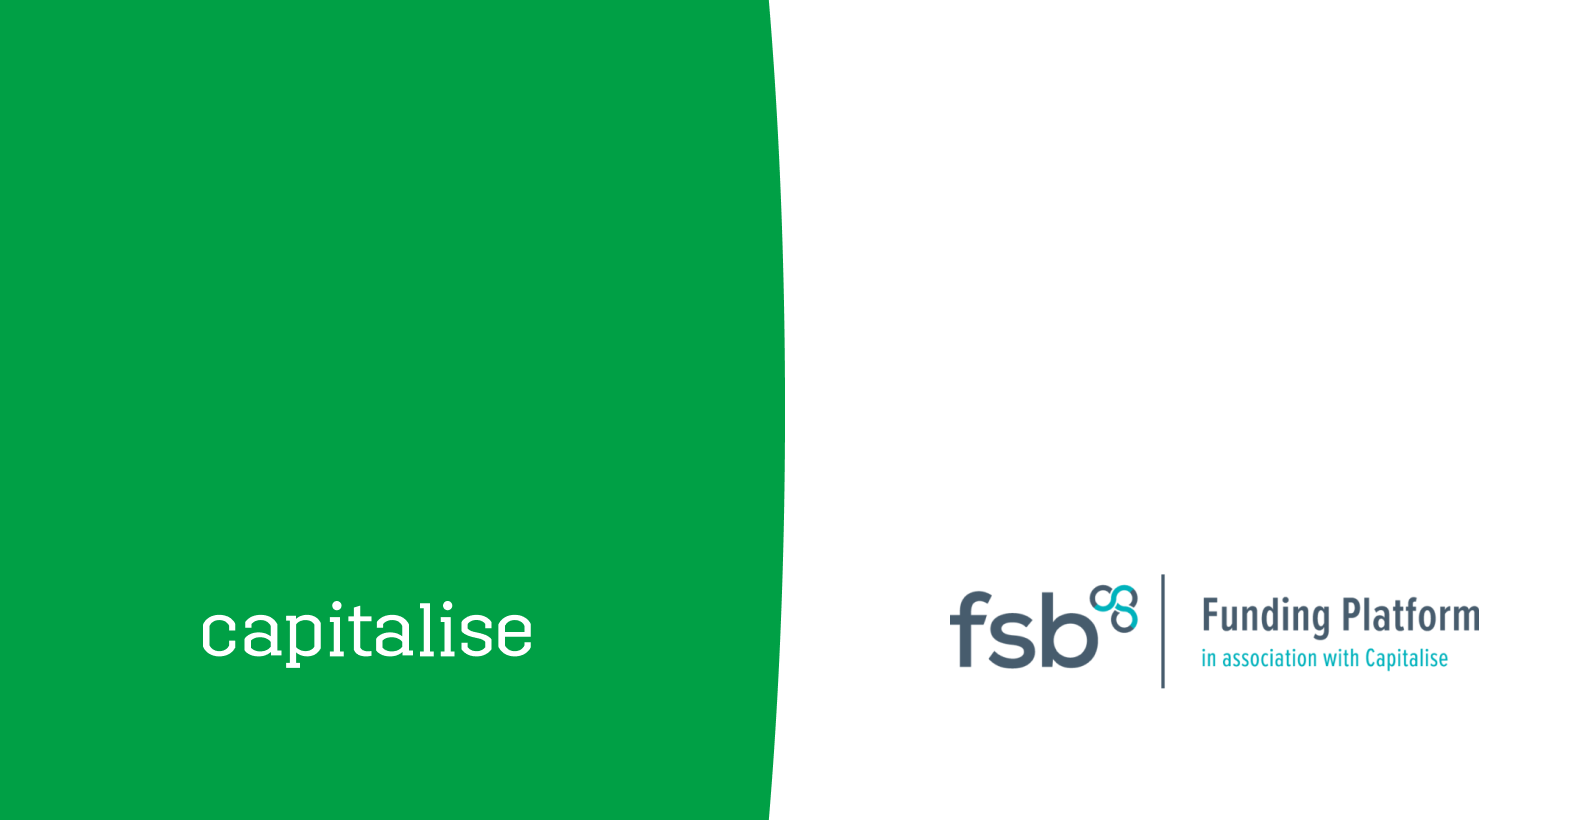 Capitalise.com Selected to Drive FSB Funding Platform image